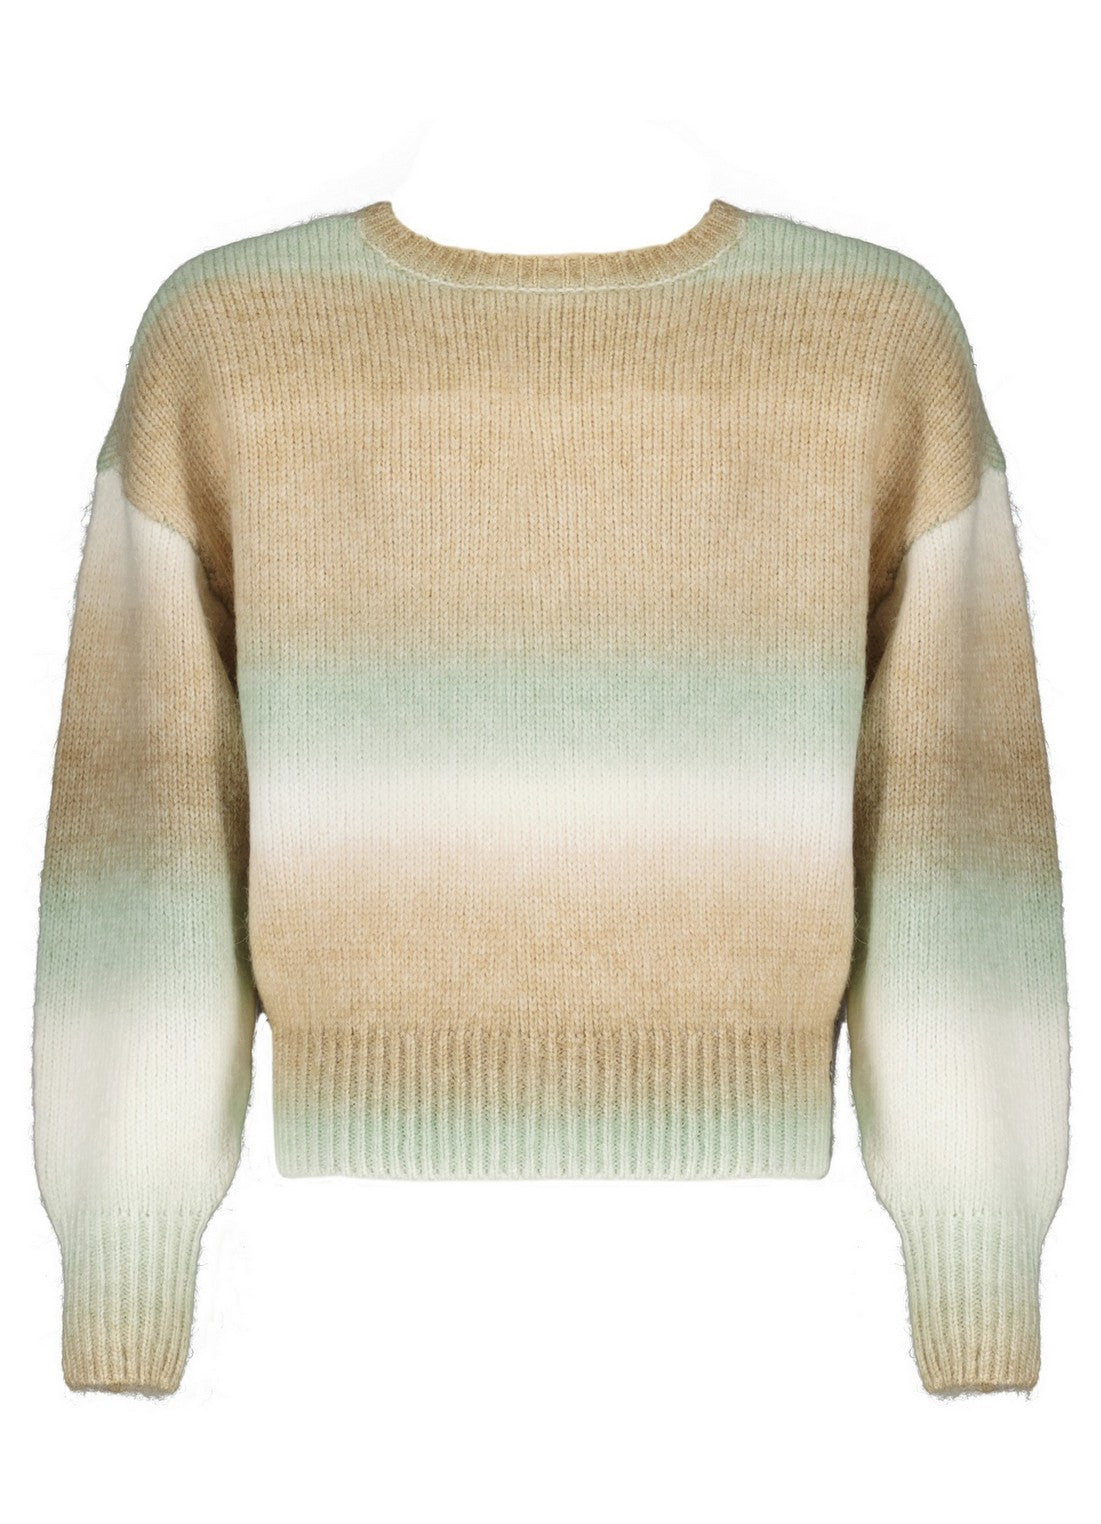 Meisjes Kes dropped sleeve knited sweater gradient effect van NoBell in de kleur Minty Grey in maat 170-176.